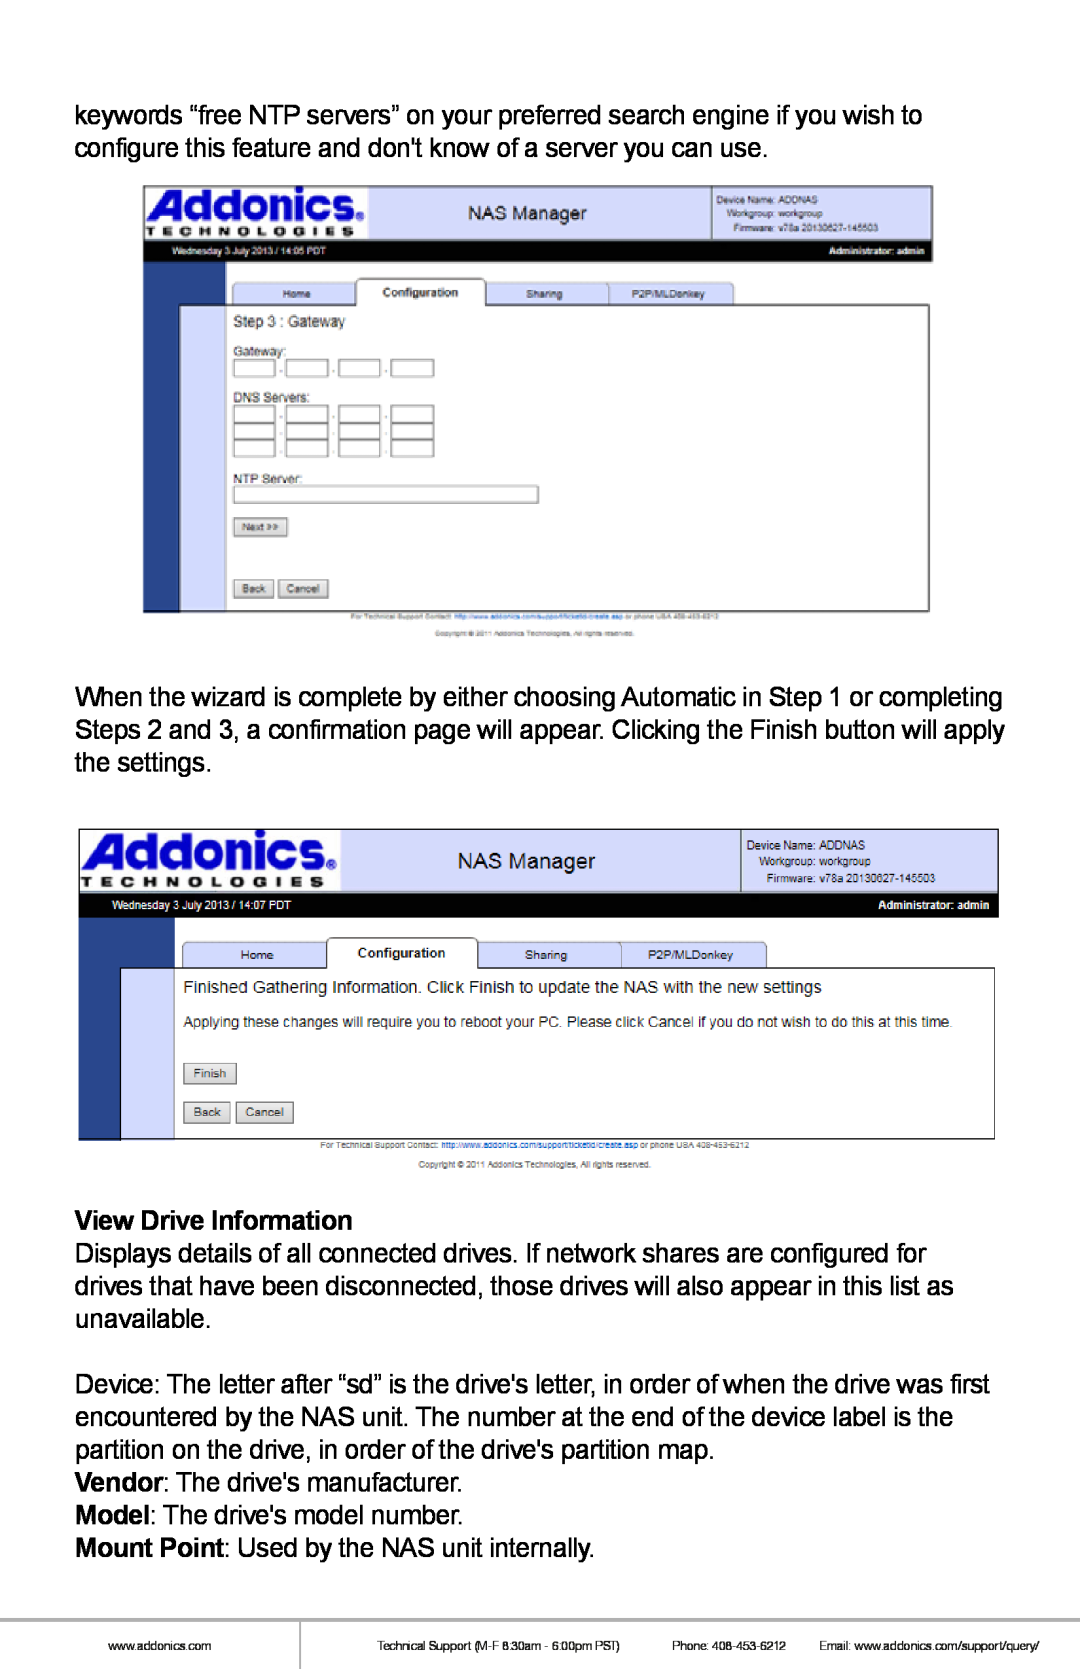 Addonics Technologies NAS4RM manual View Drive Information 